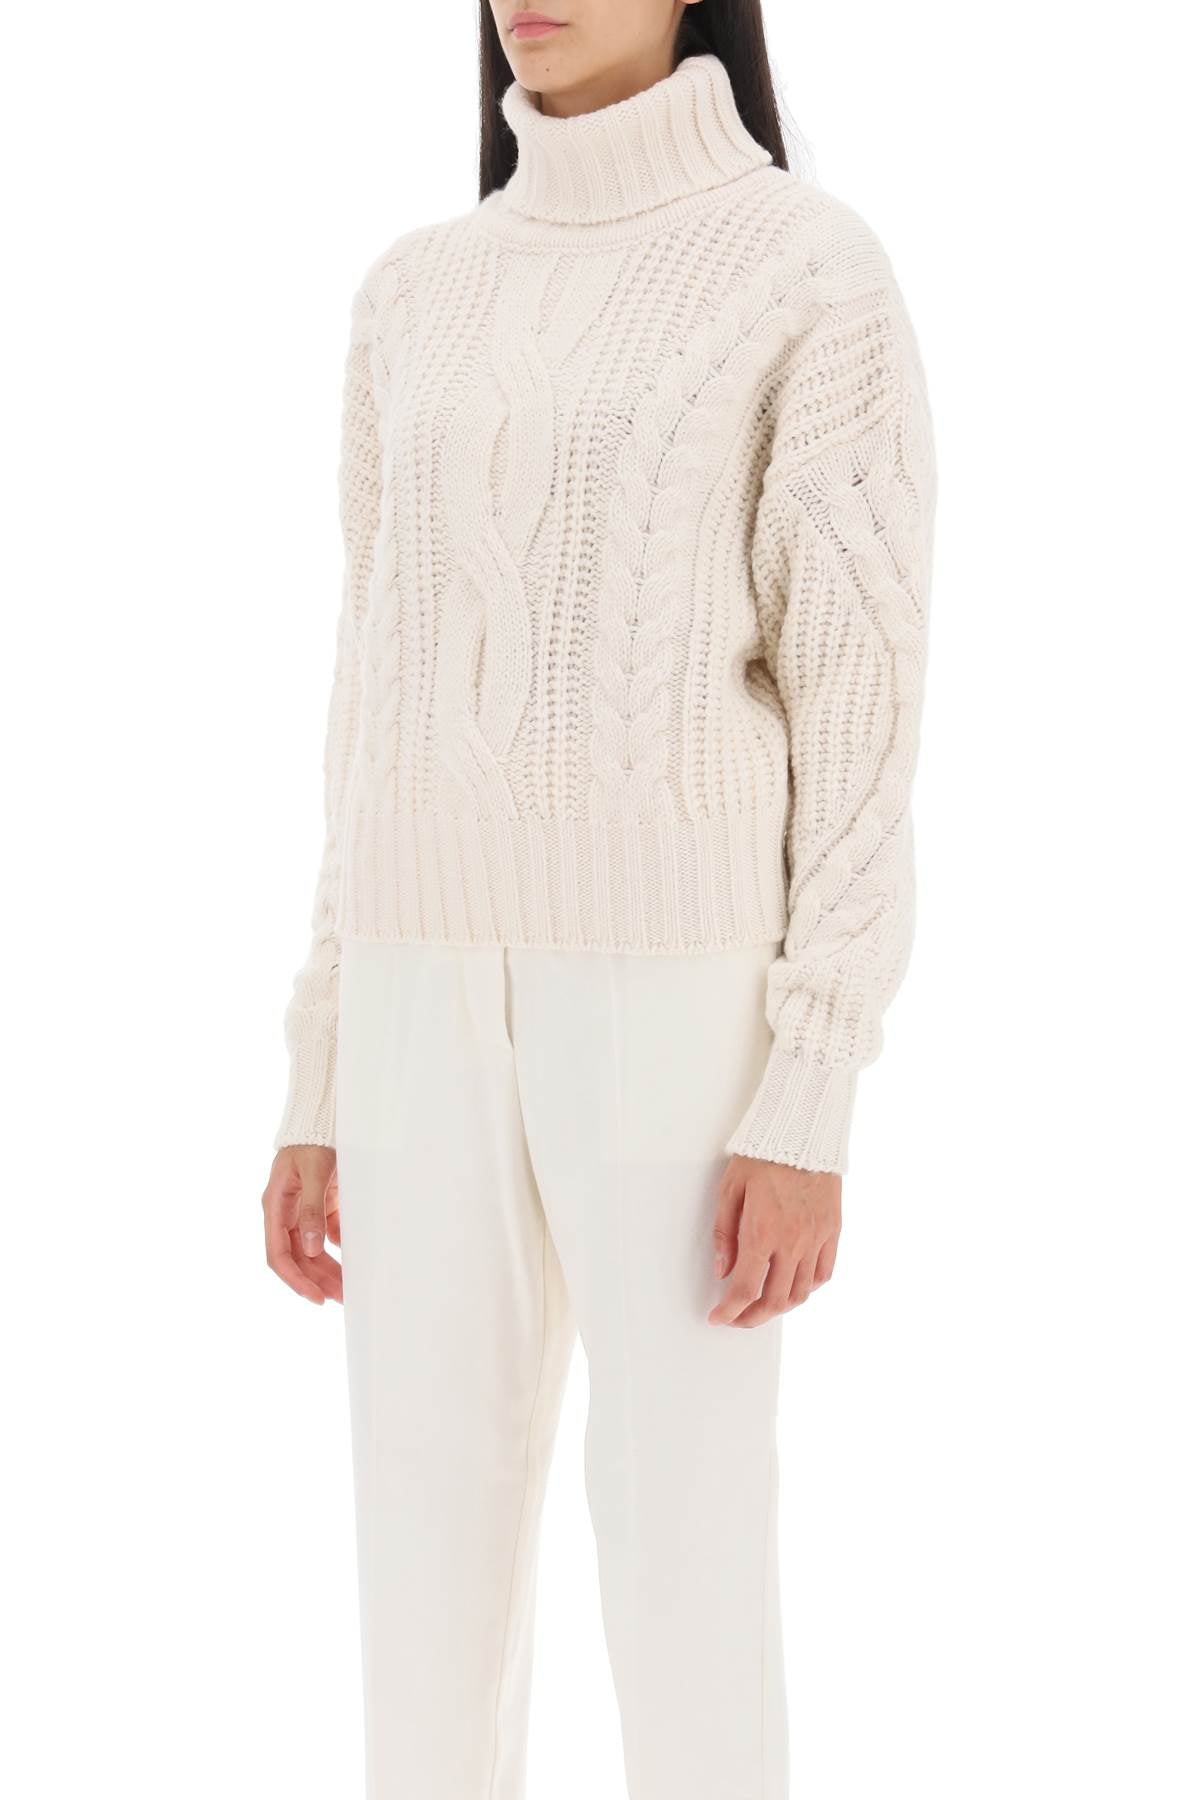 Mvp wardrobe visconti cable knit sweater-3